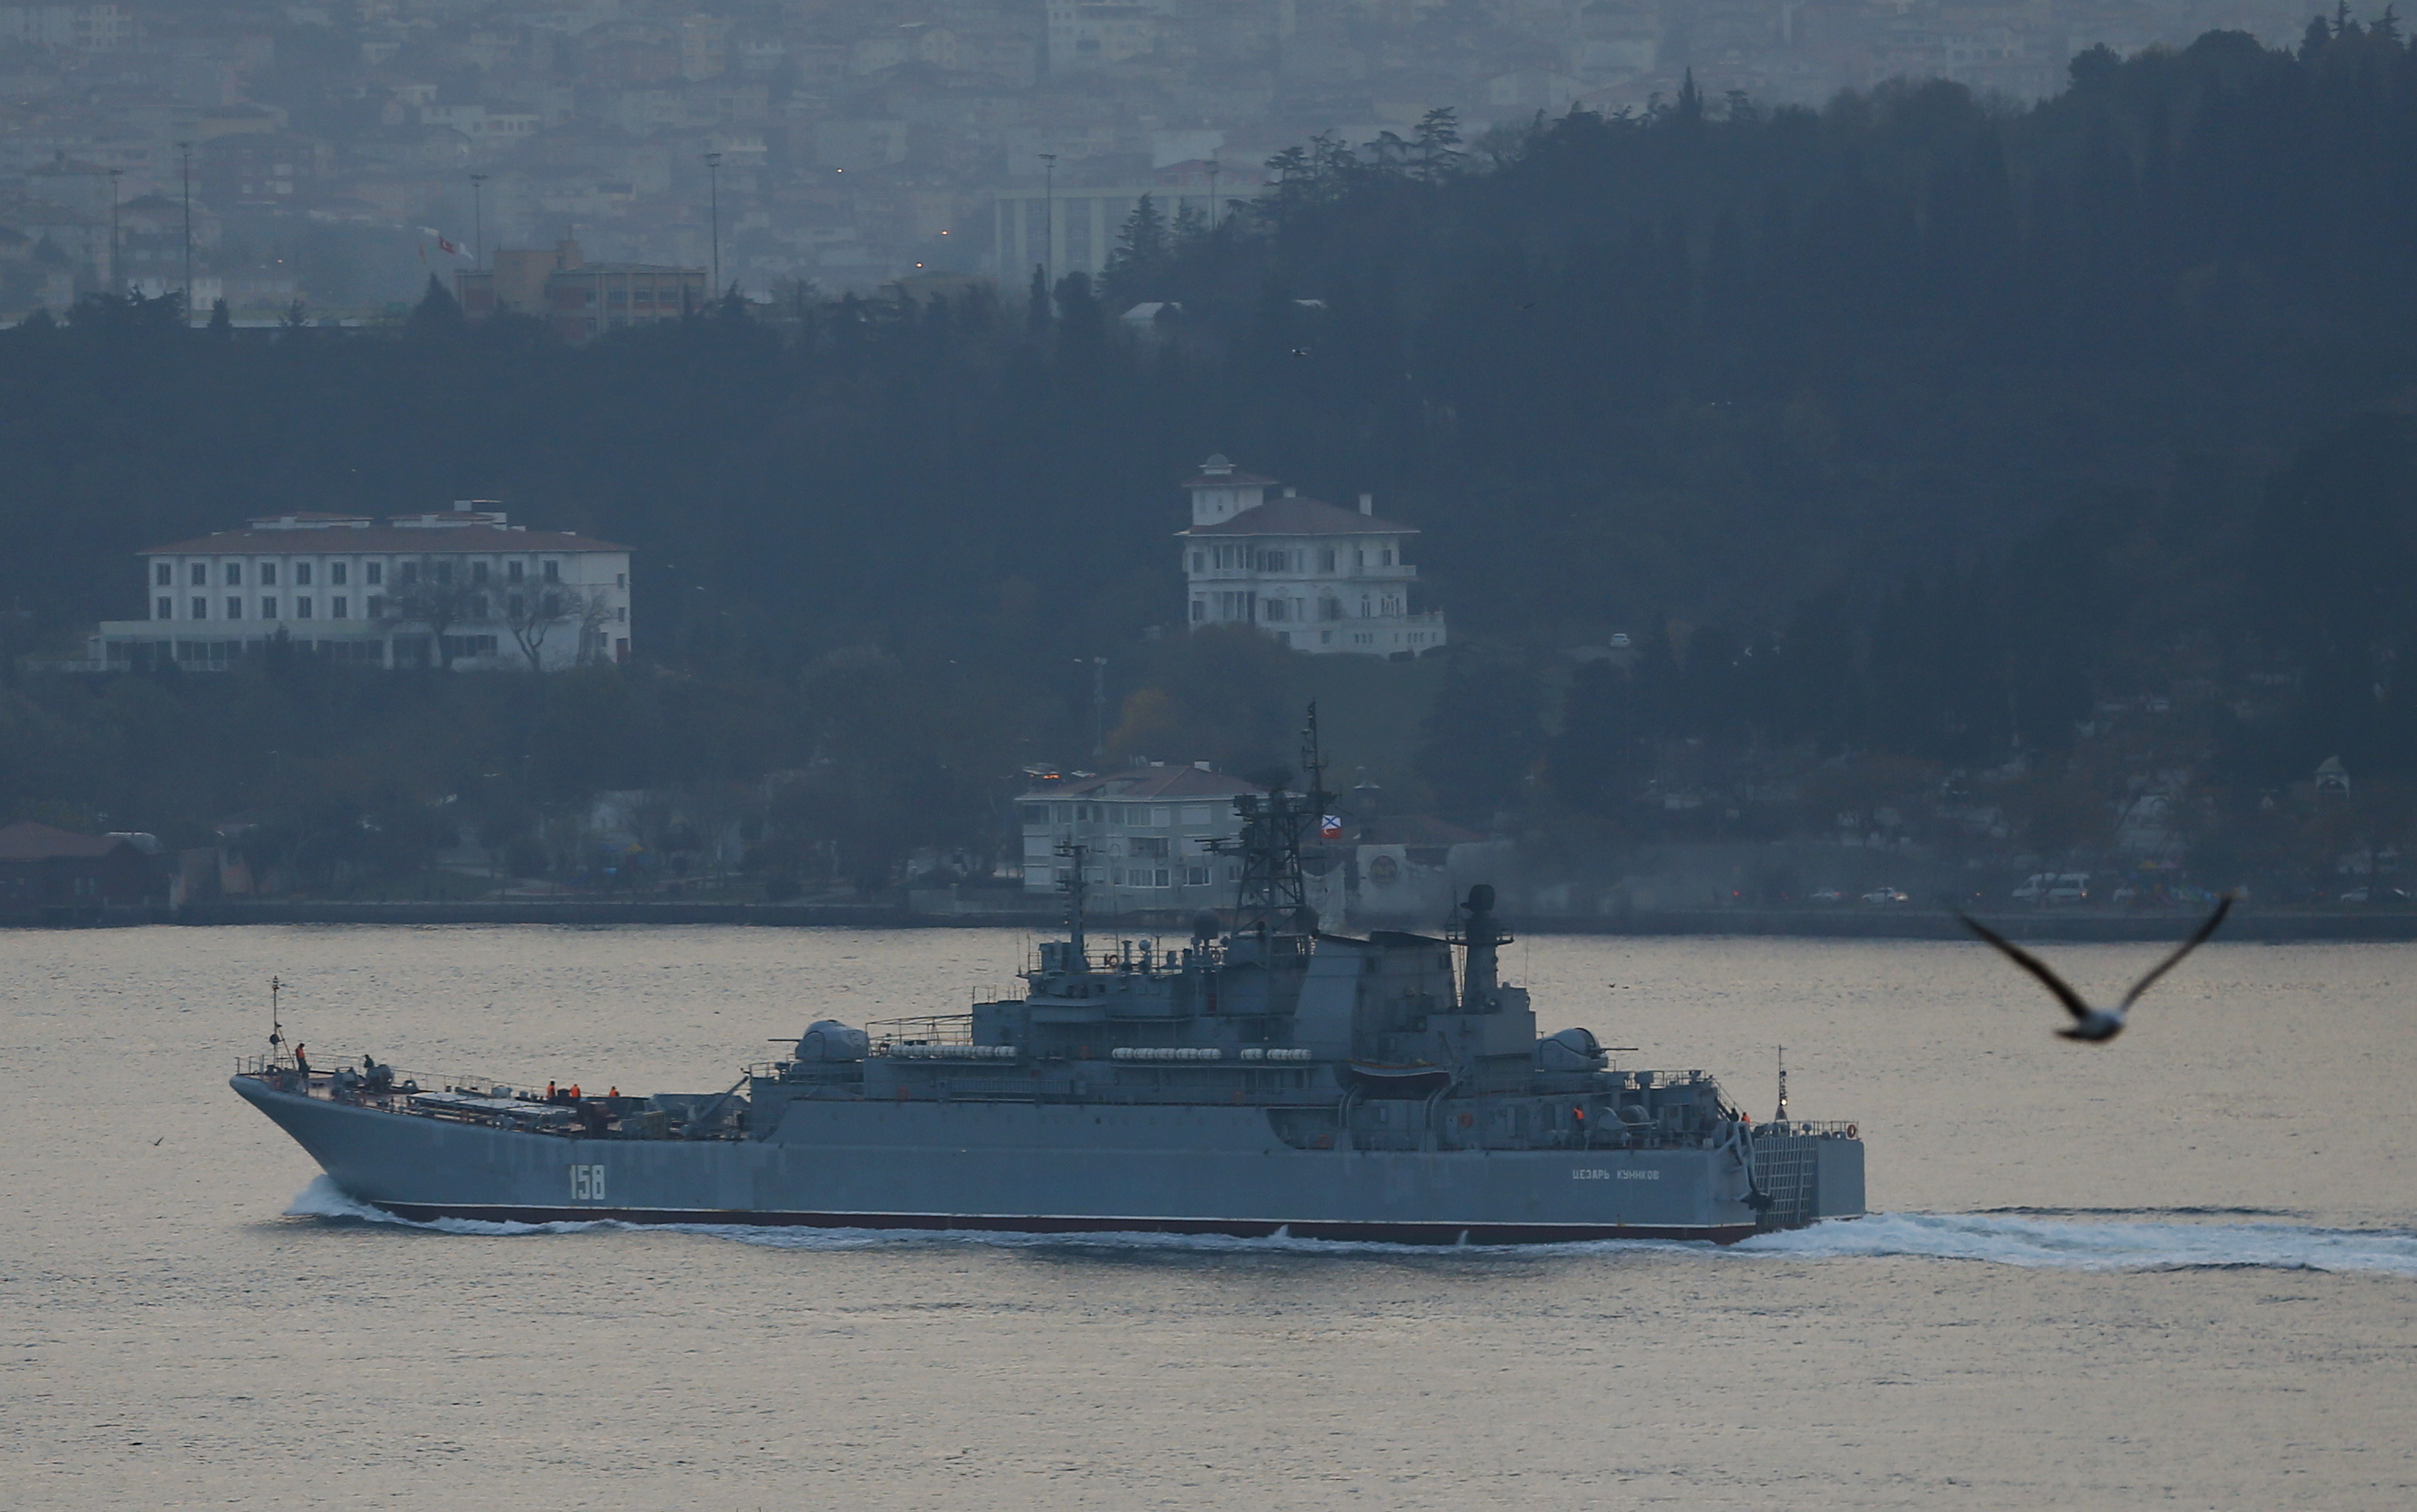 The Russian Navy's large landing ship Caesar Kunikov sets sail in the Bosphorus towards the Black Sea, in Istanbul